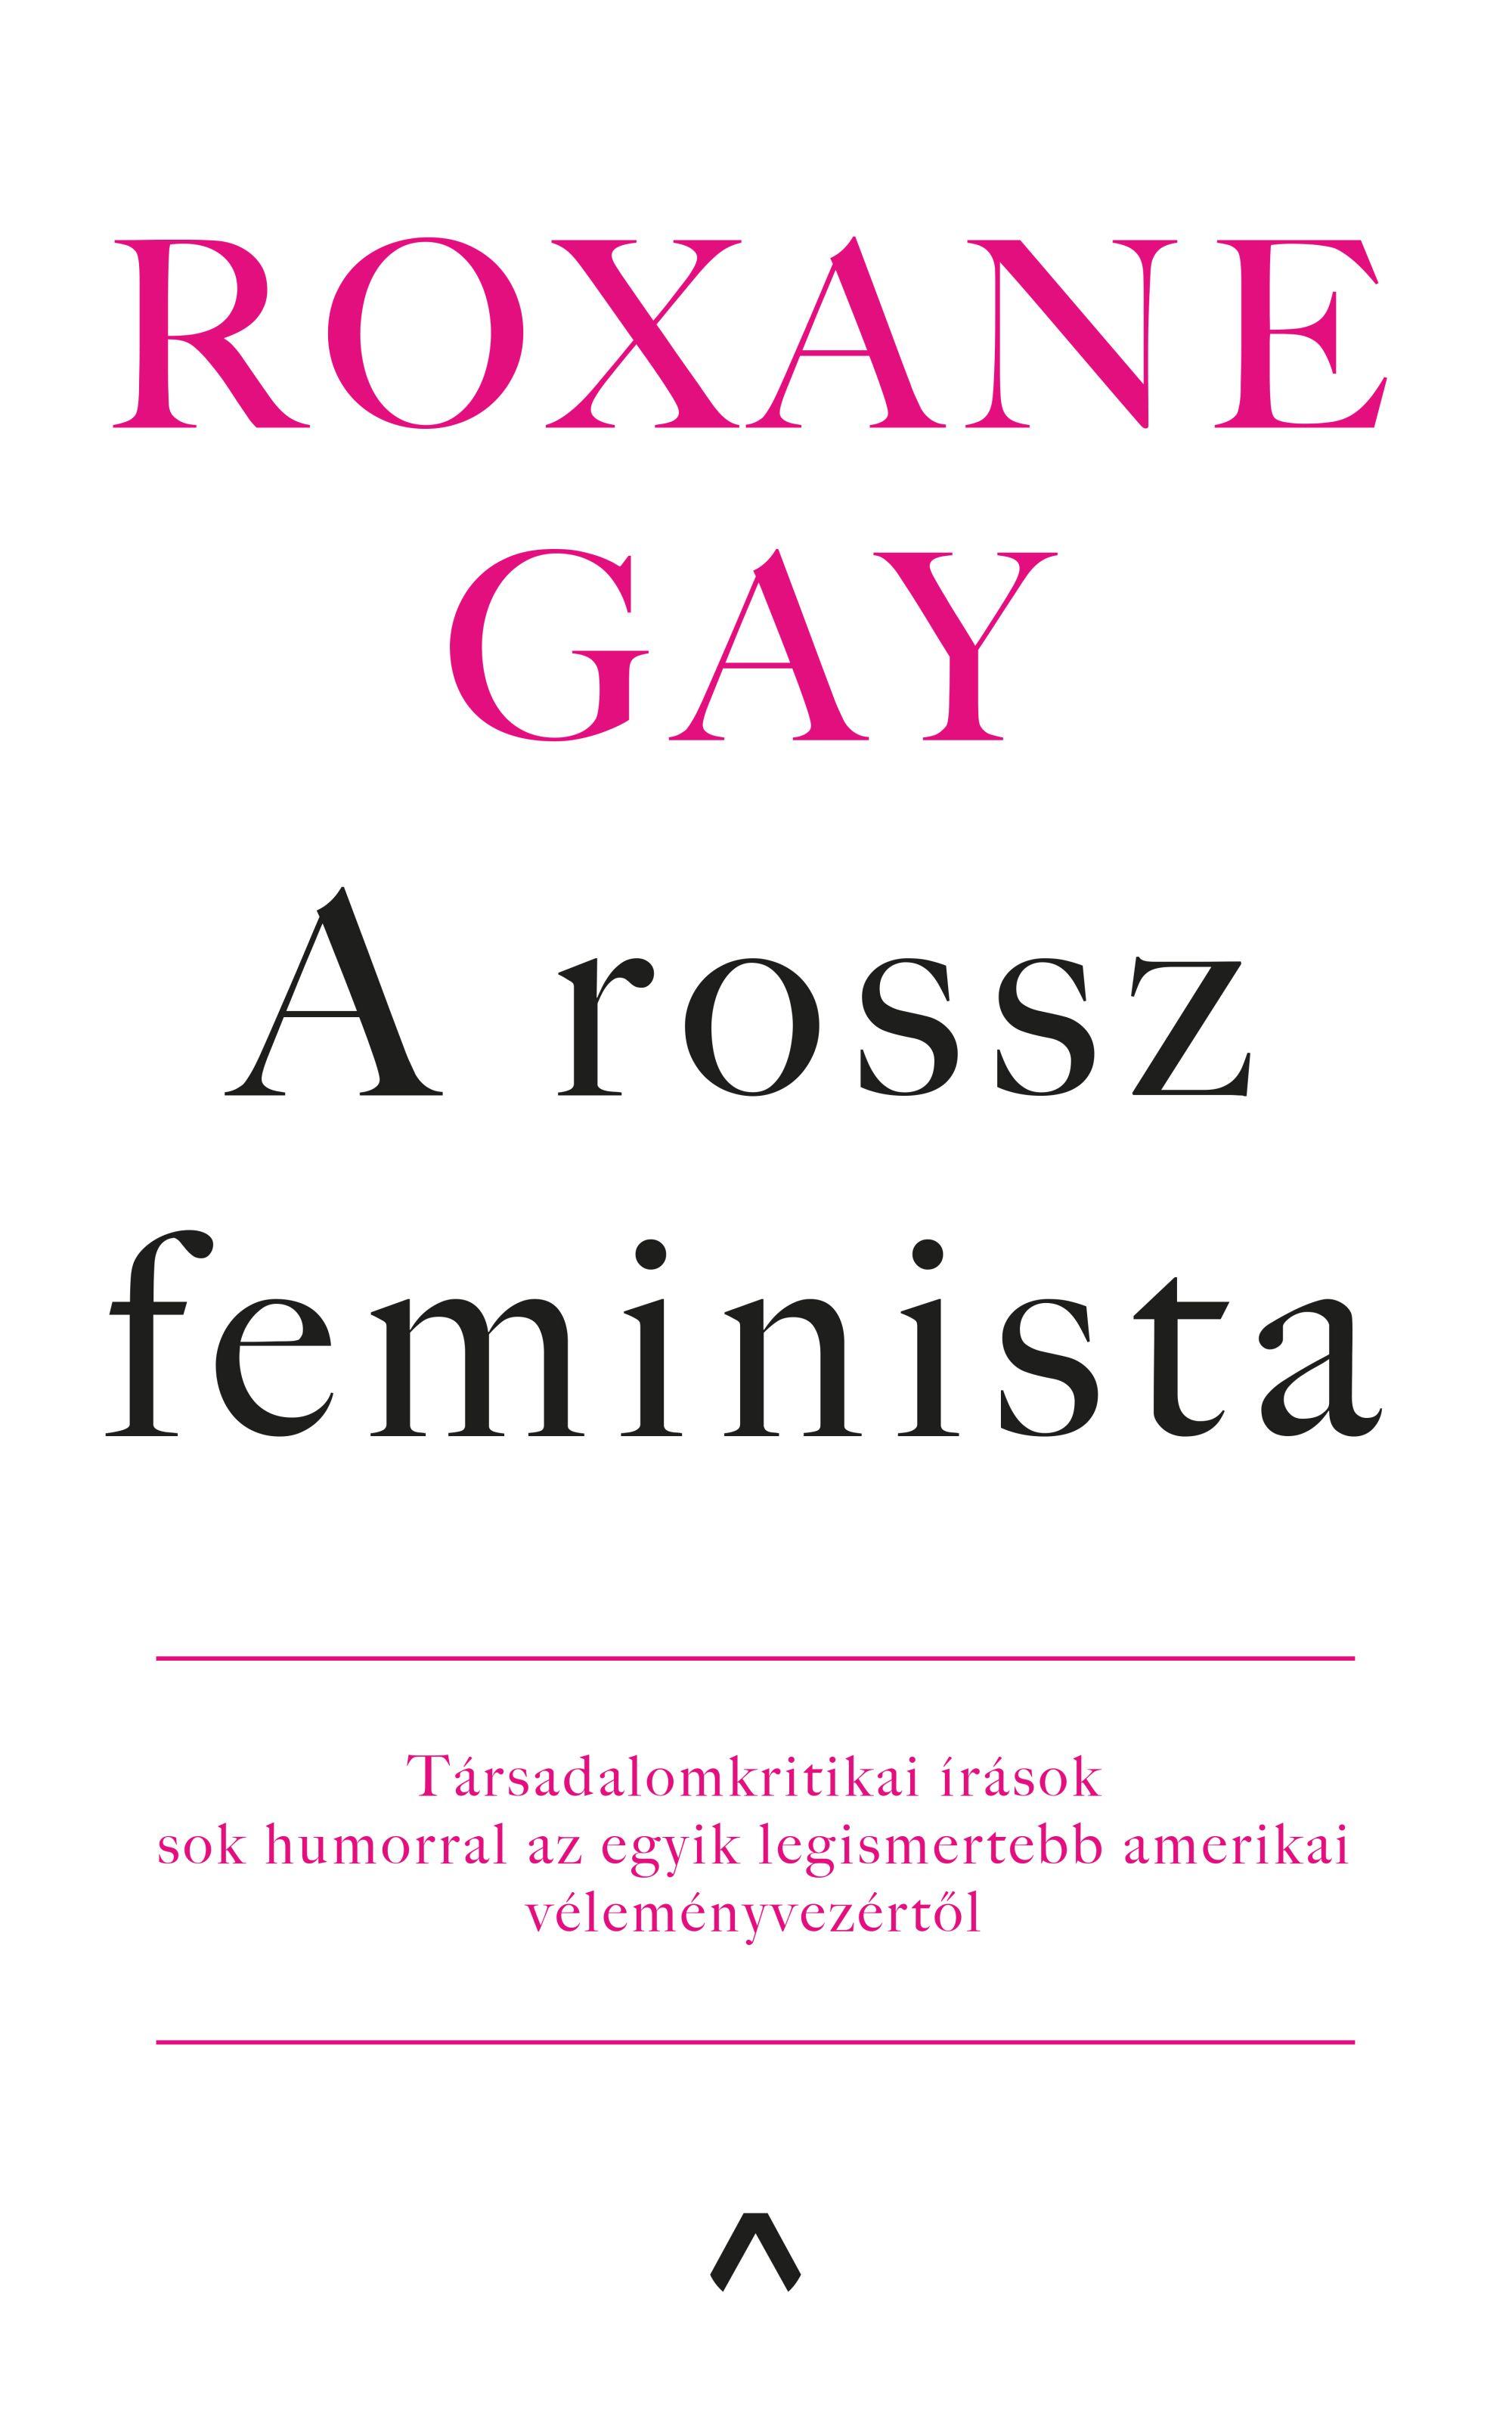 Roxane Gay - A rossz feminista [outlet]